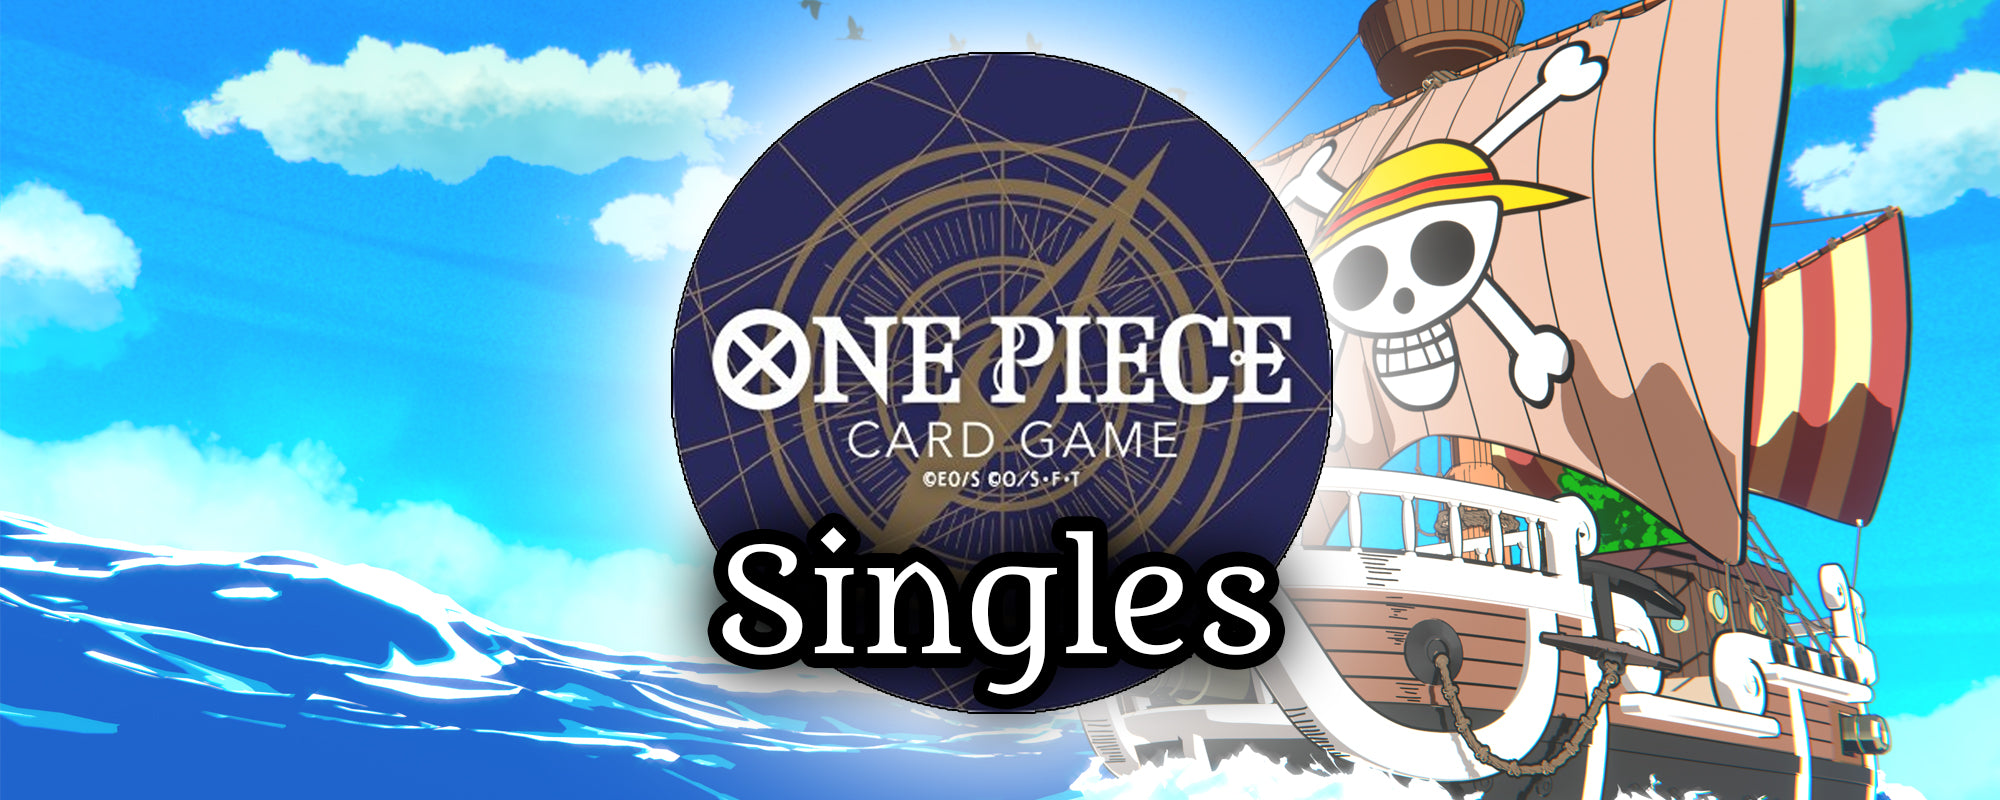 One Piece Singles